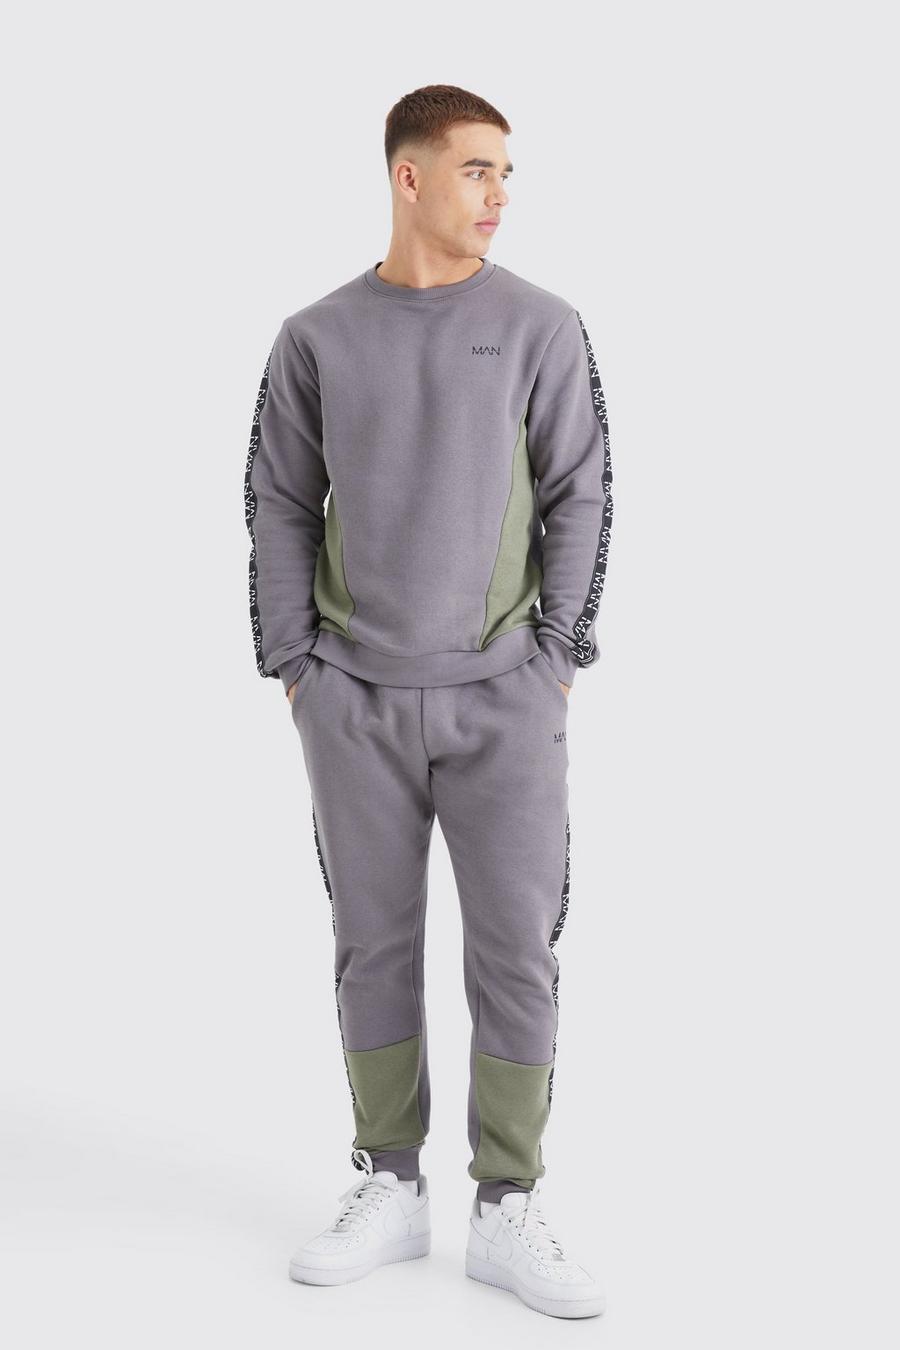 Man-Dash Colorblock Trainingsanzug, Charcoal image number 1